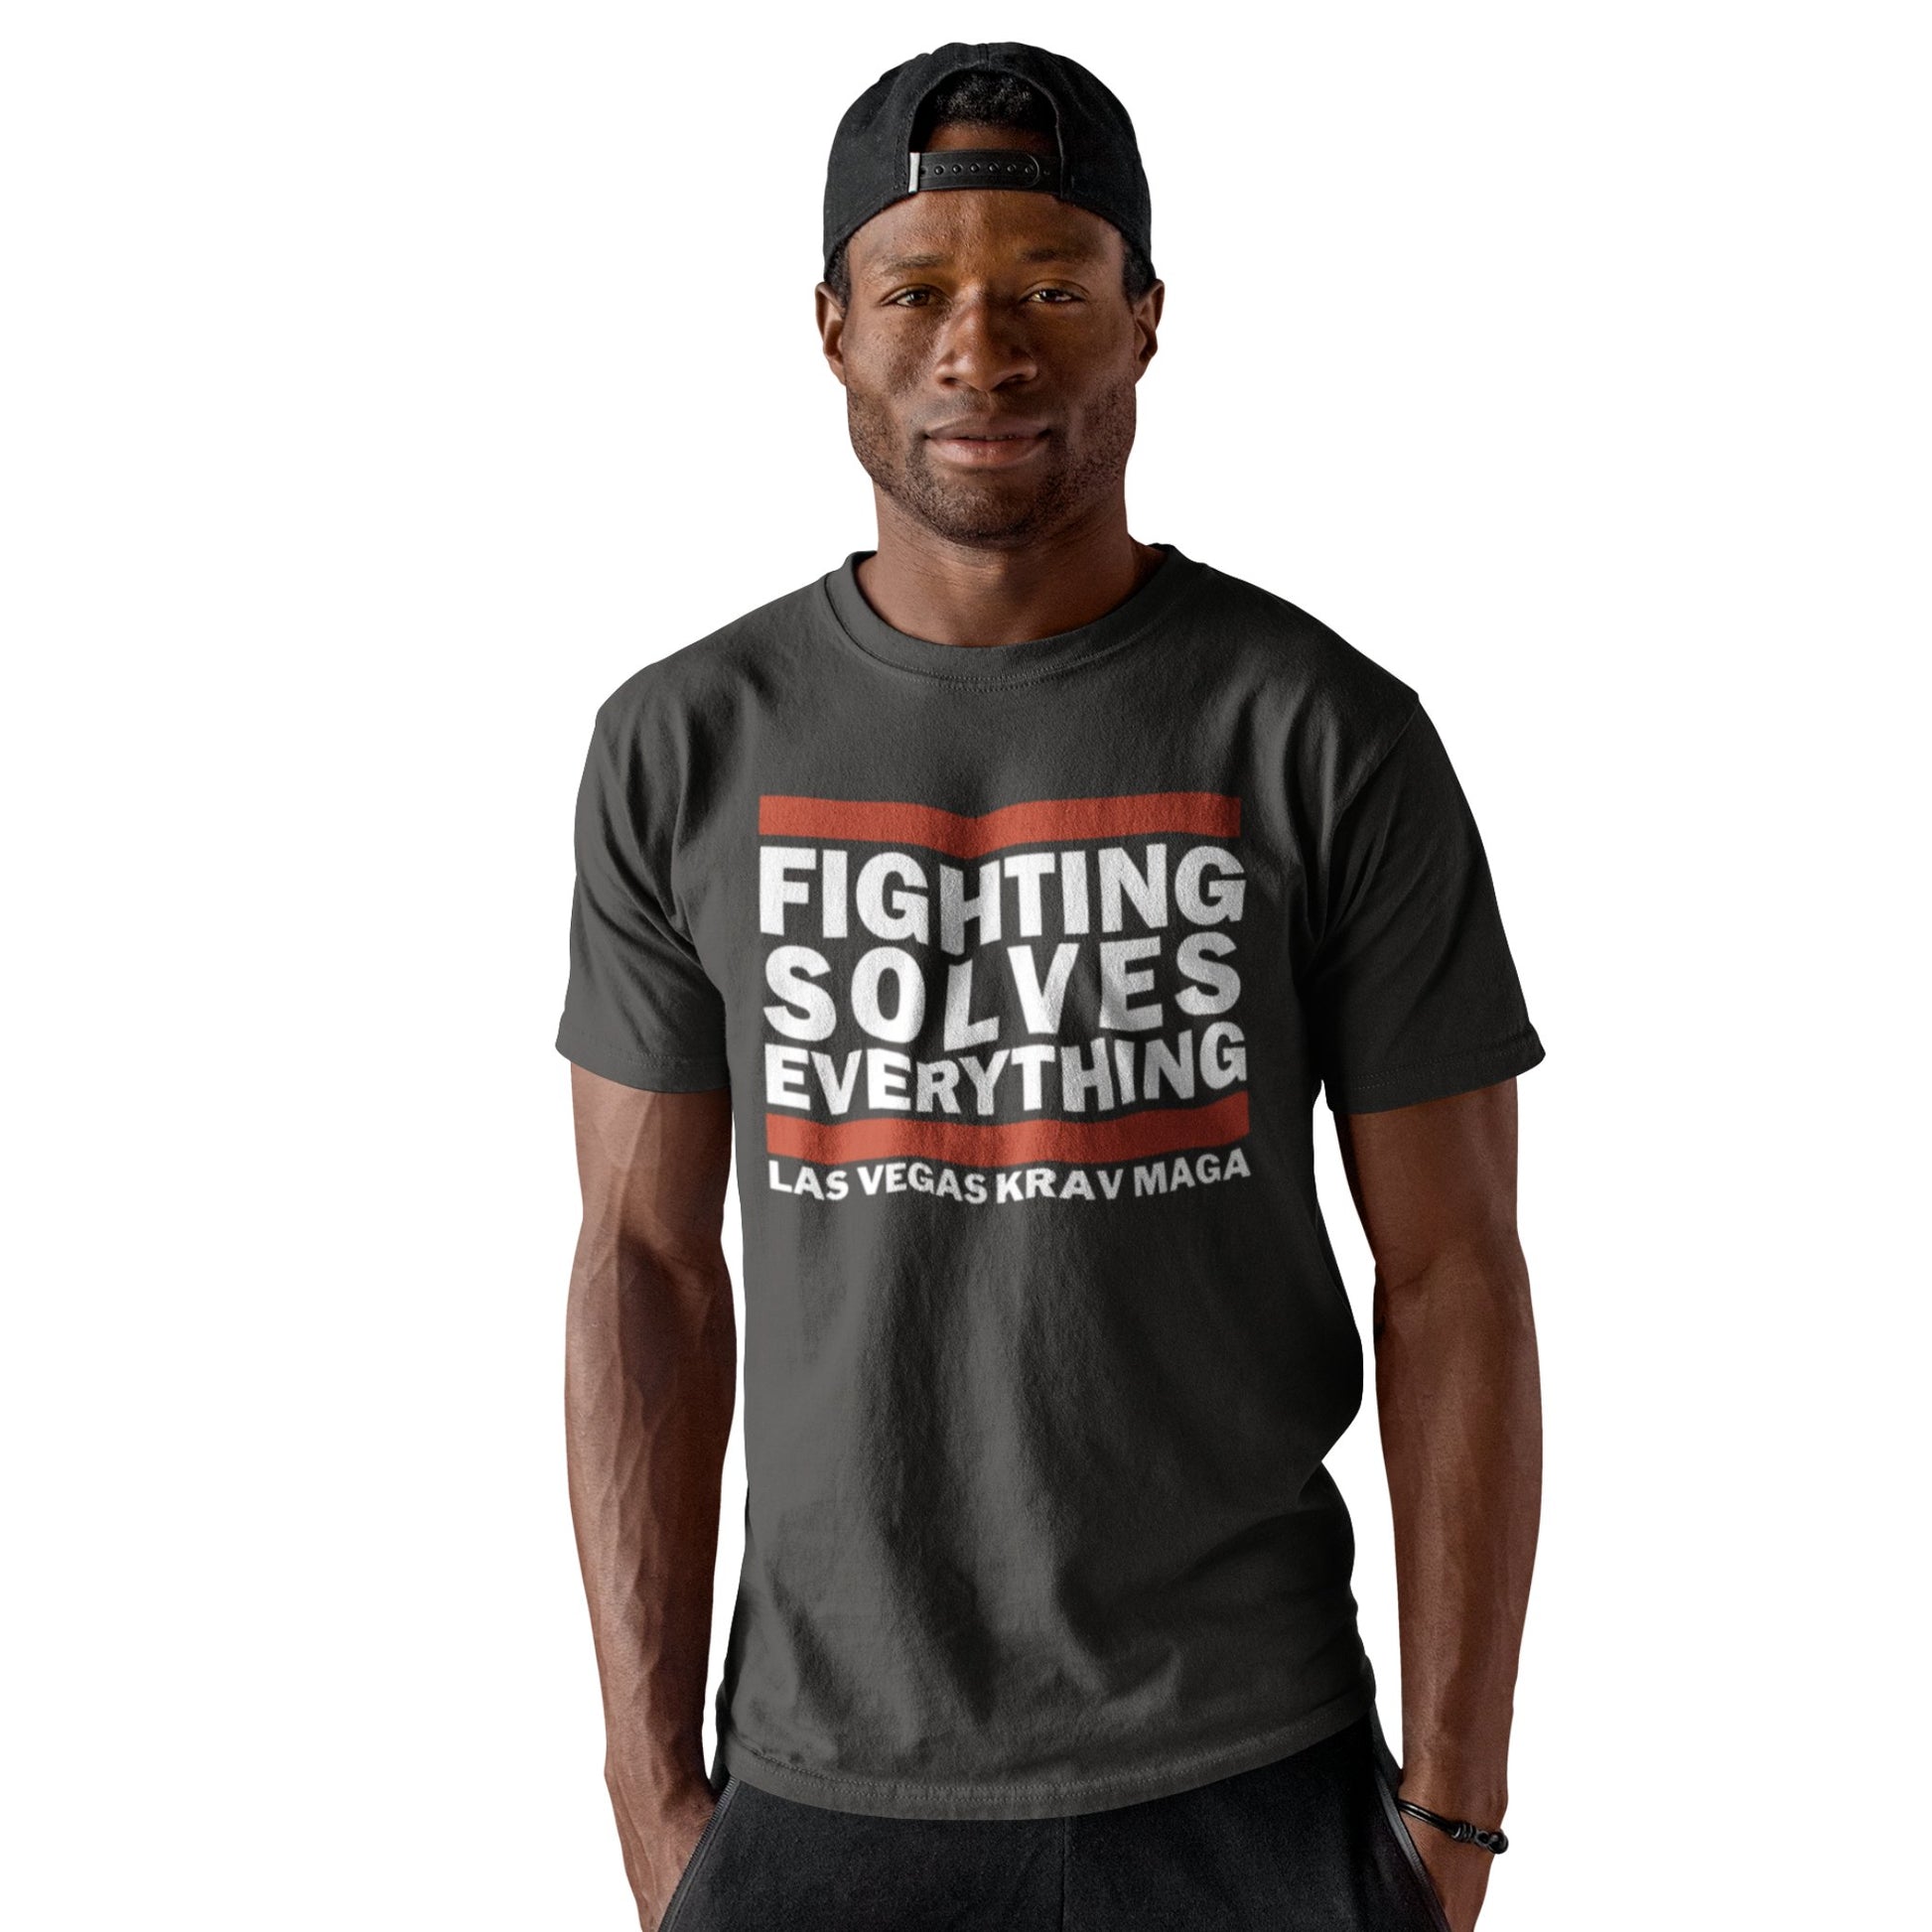 Las Vegas Krav Maga 'Fighting Solves Everything' Unisex T-Shirt - Las Vegas Combat Academy